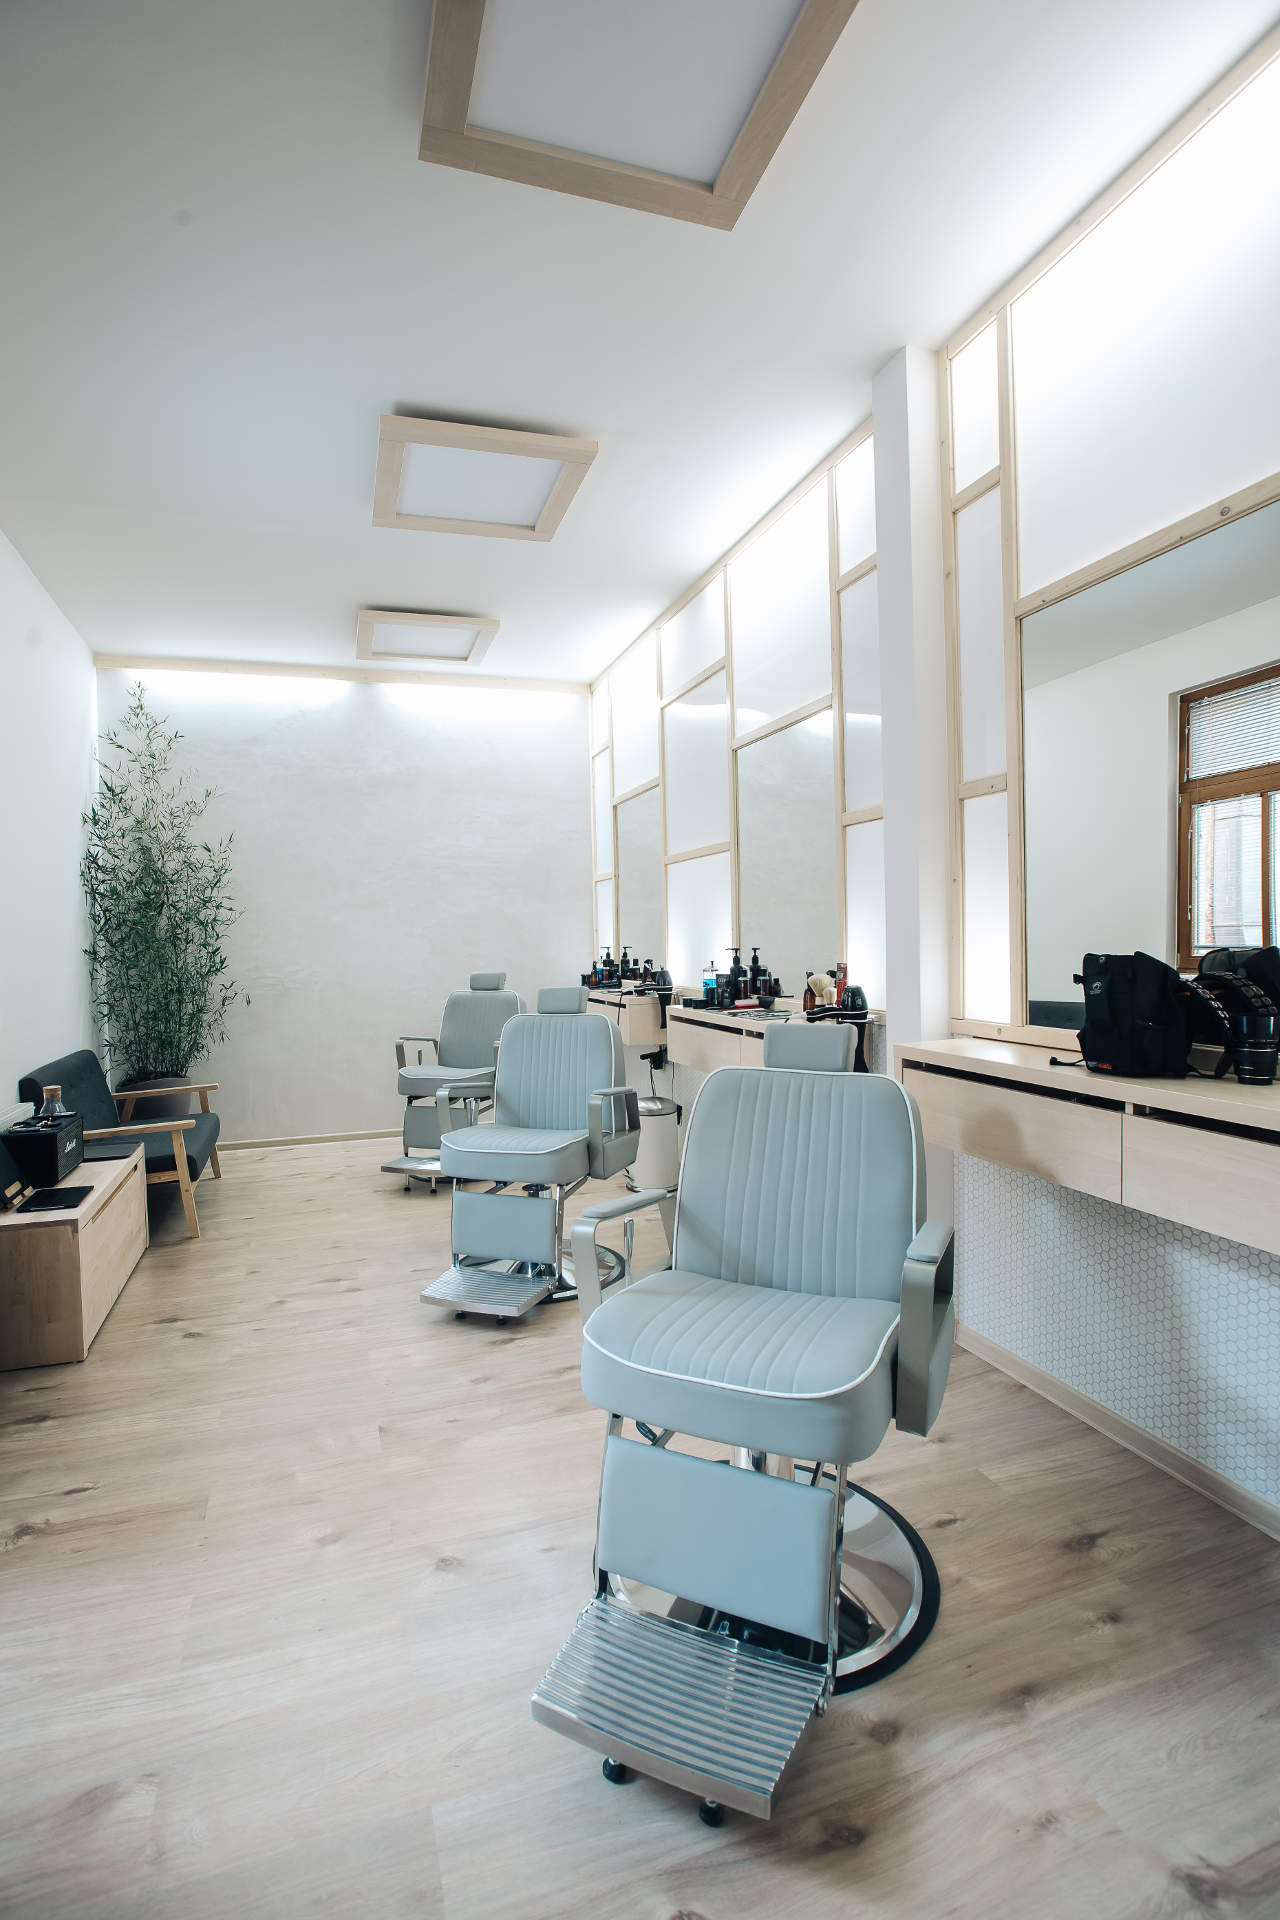 About Barbershop BUDDY Praha